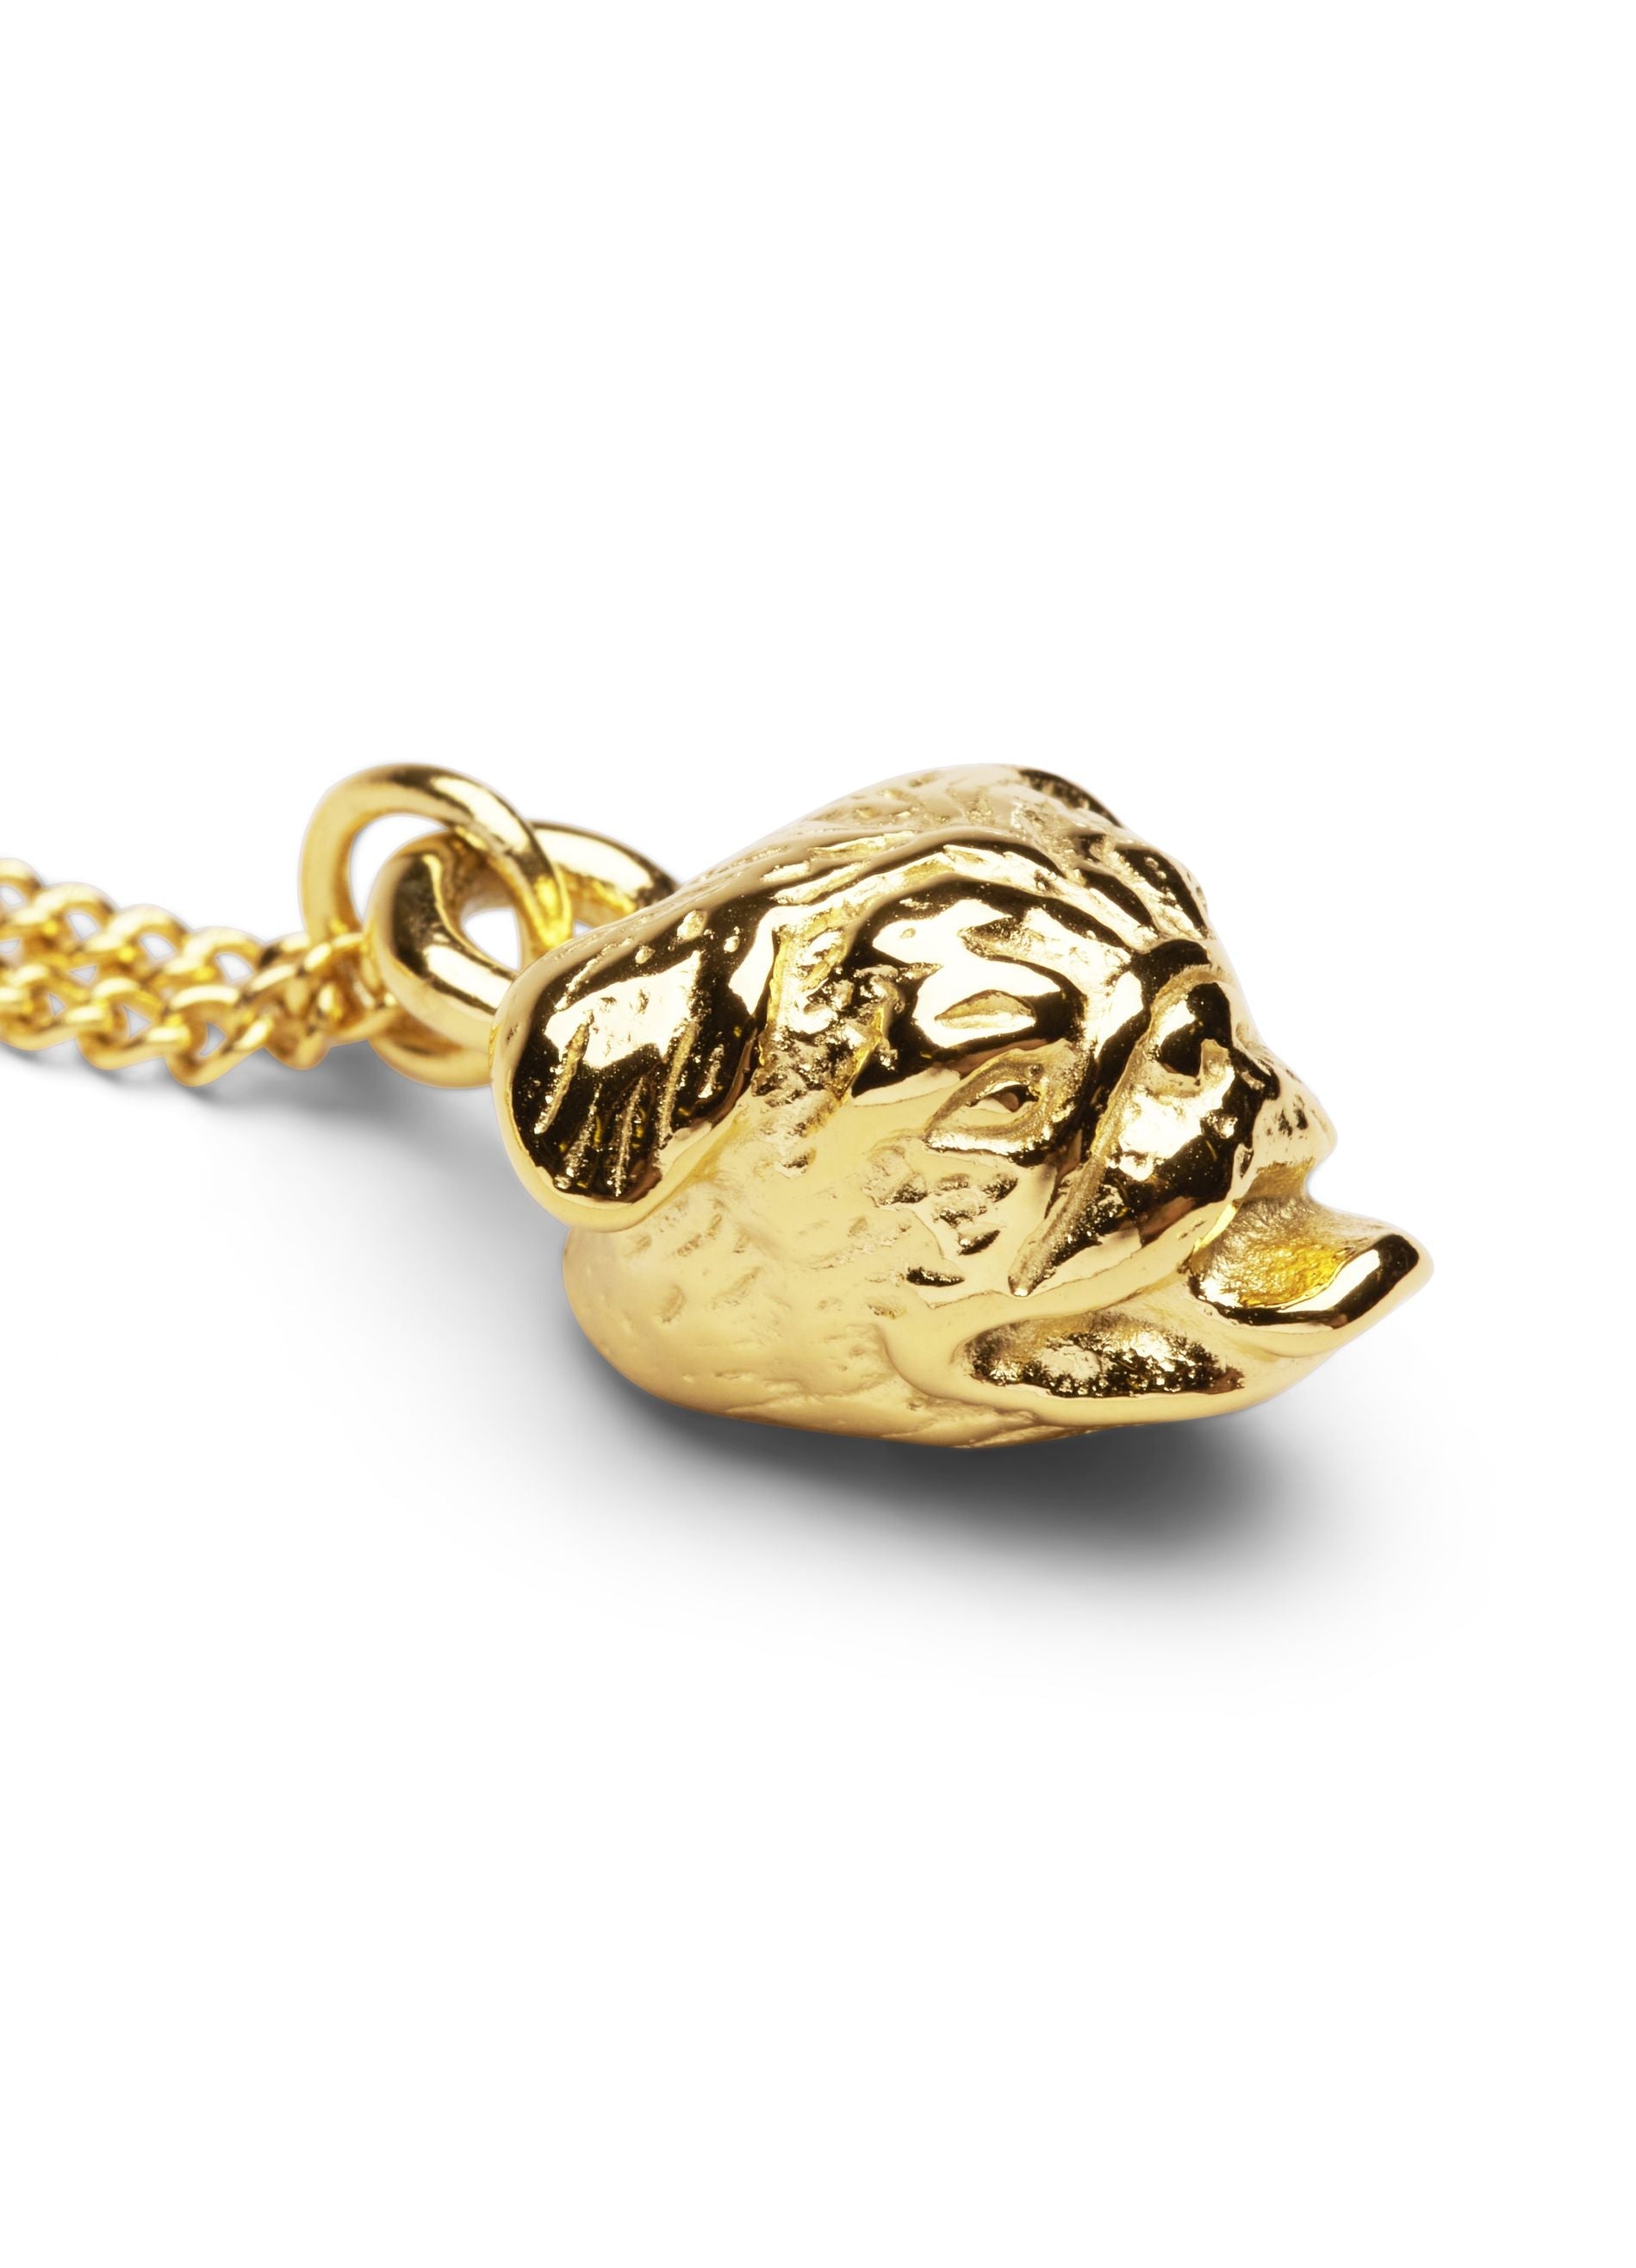 Skultuna Pug Necklace, Gold Plated